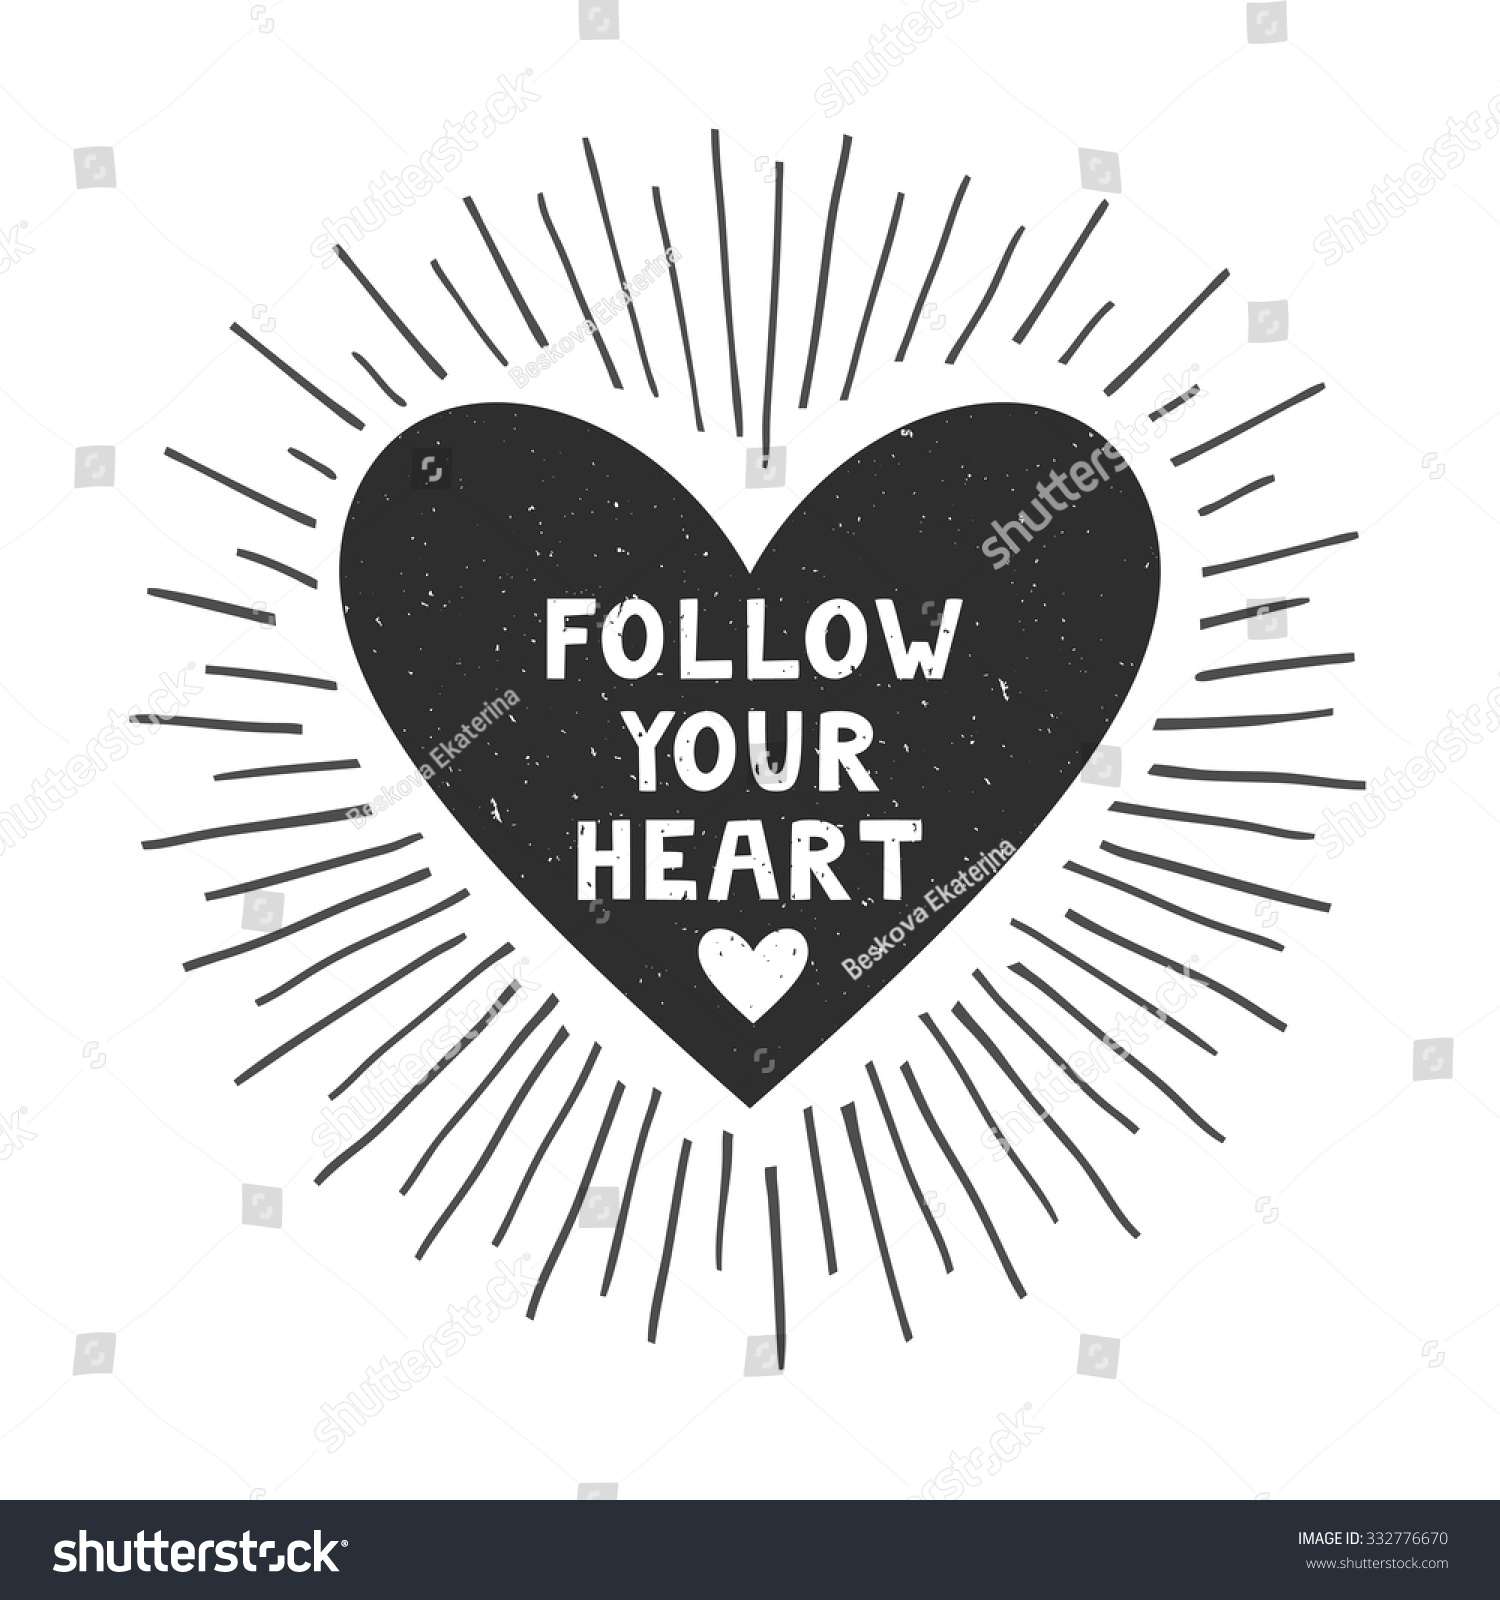 Follow Your Heart In Latin 86